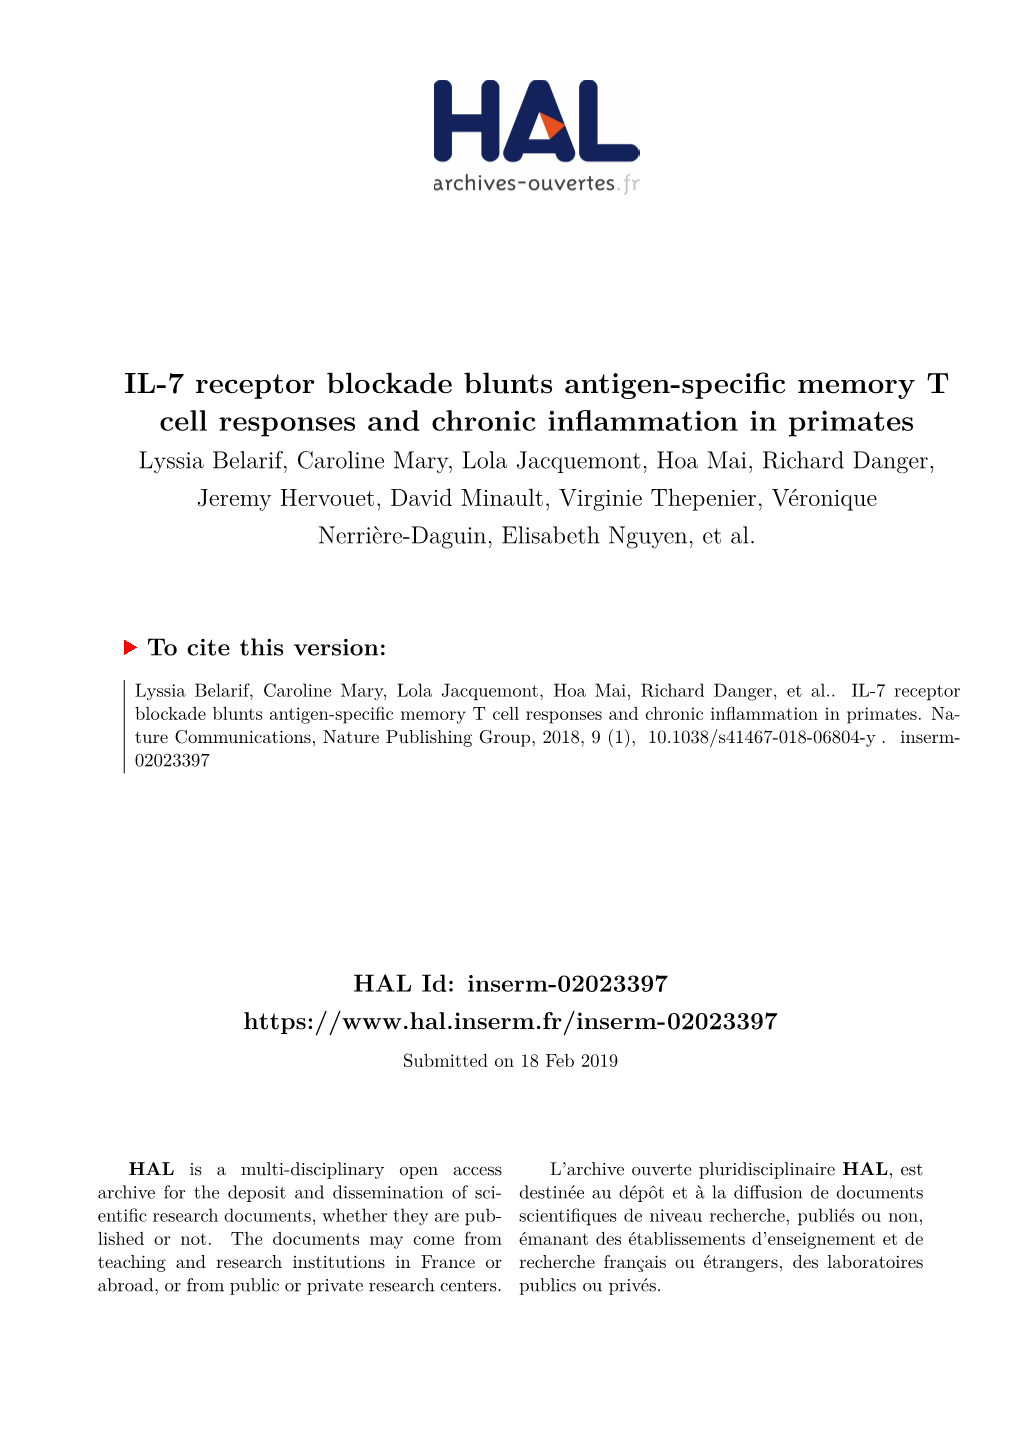 IL-7 Receptor Blockade Blunts Antigen-Specific Memory T Cell